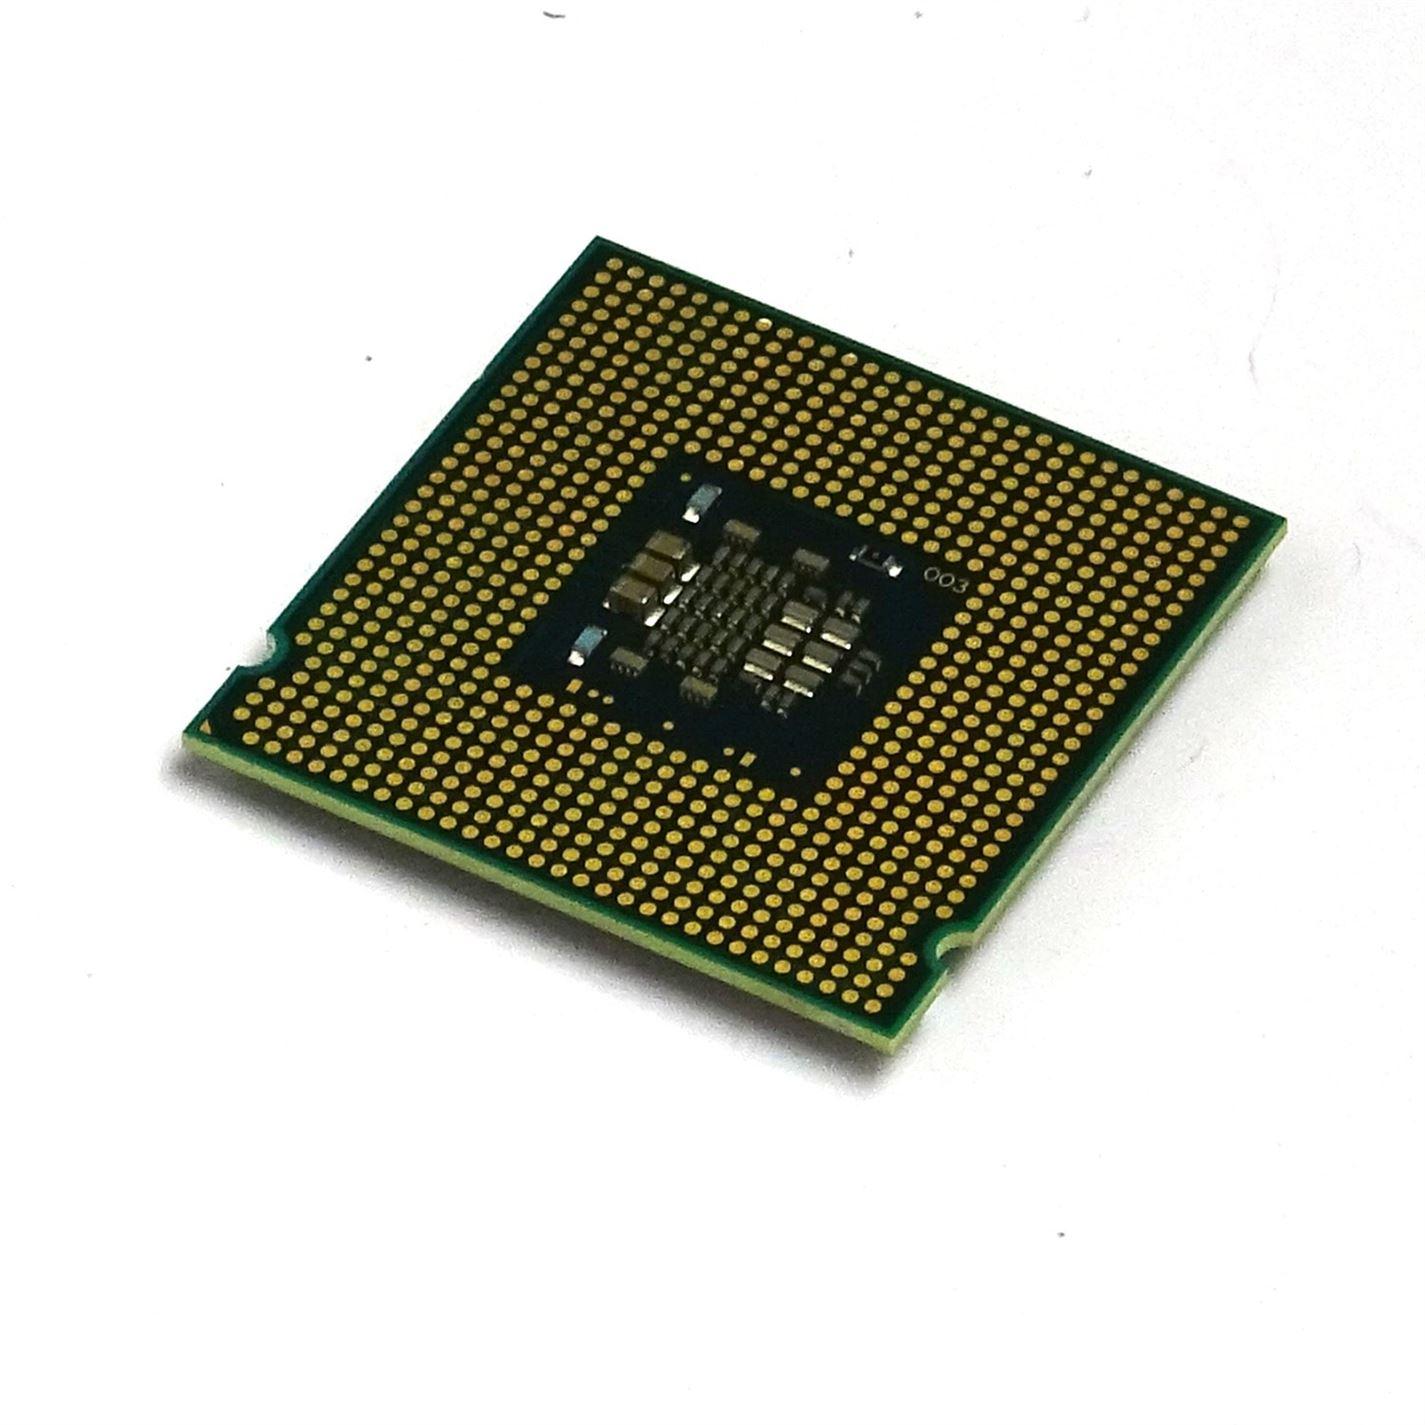 Pre Owned - Intel E1200 - Celeron Dual Core - SLAQW - 1.6Ghz - UK Seller